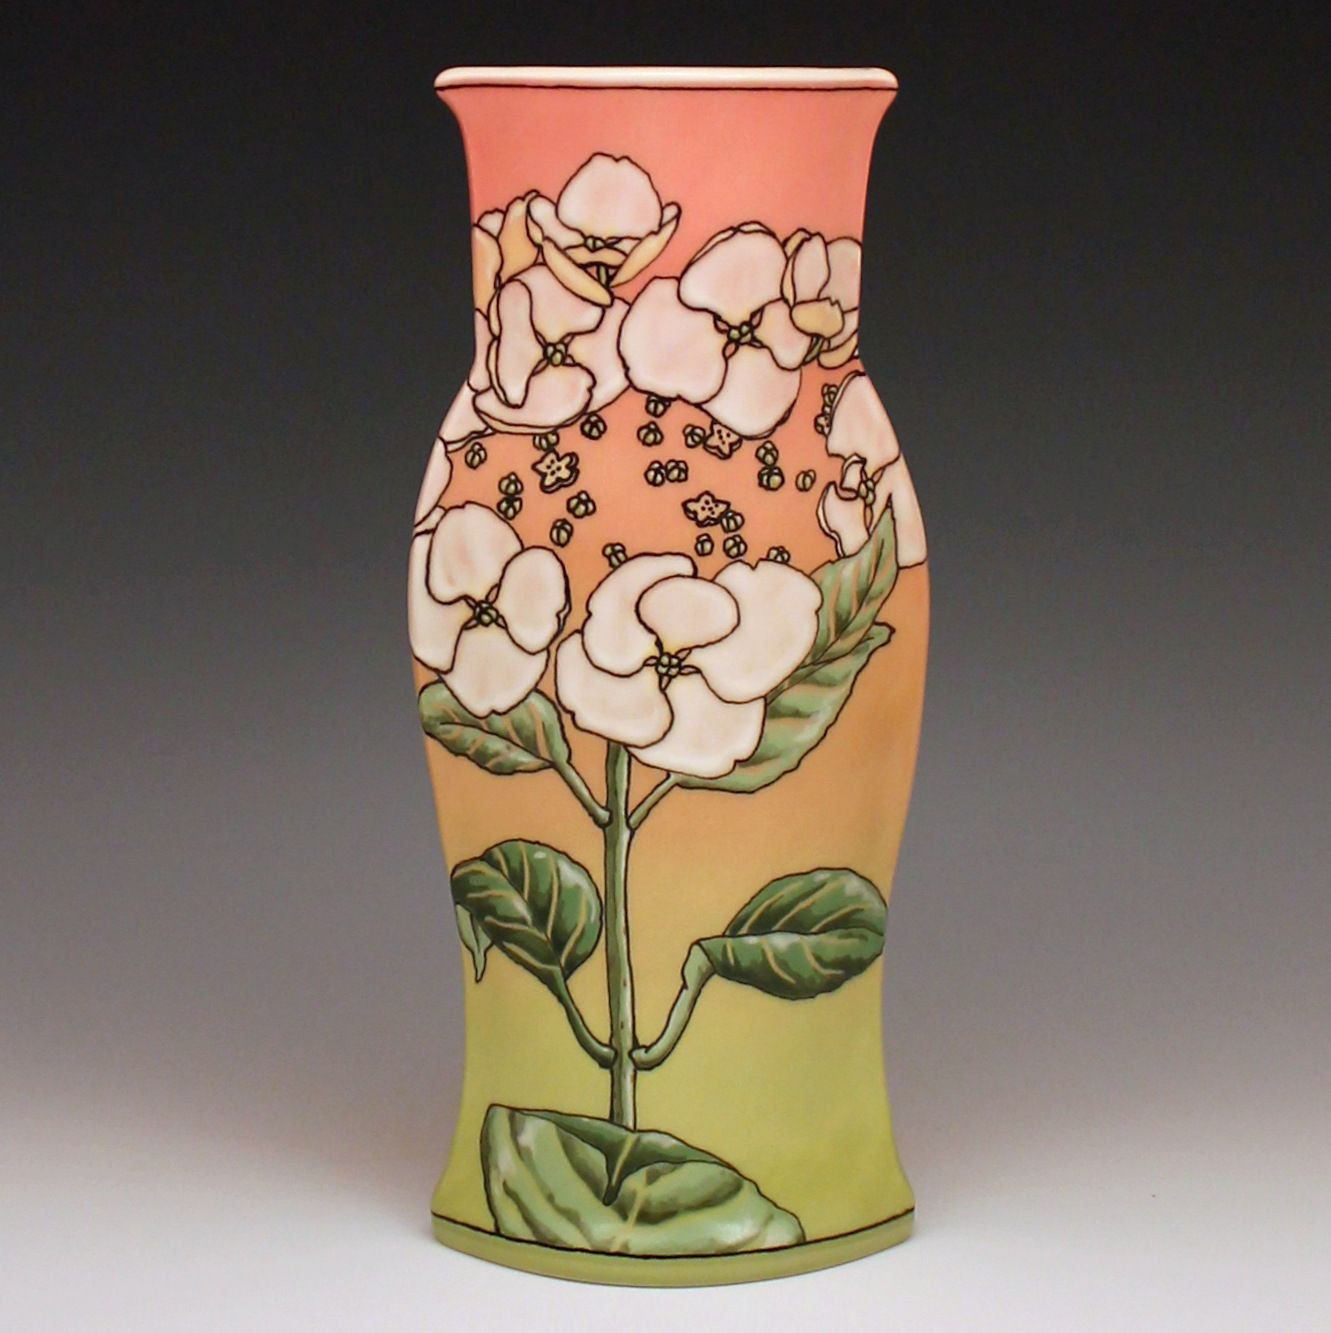 roman vase for sale of hydrangea vase by sarah gregory work pinterest hydrangea with hydrangea vase by sarah gregory